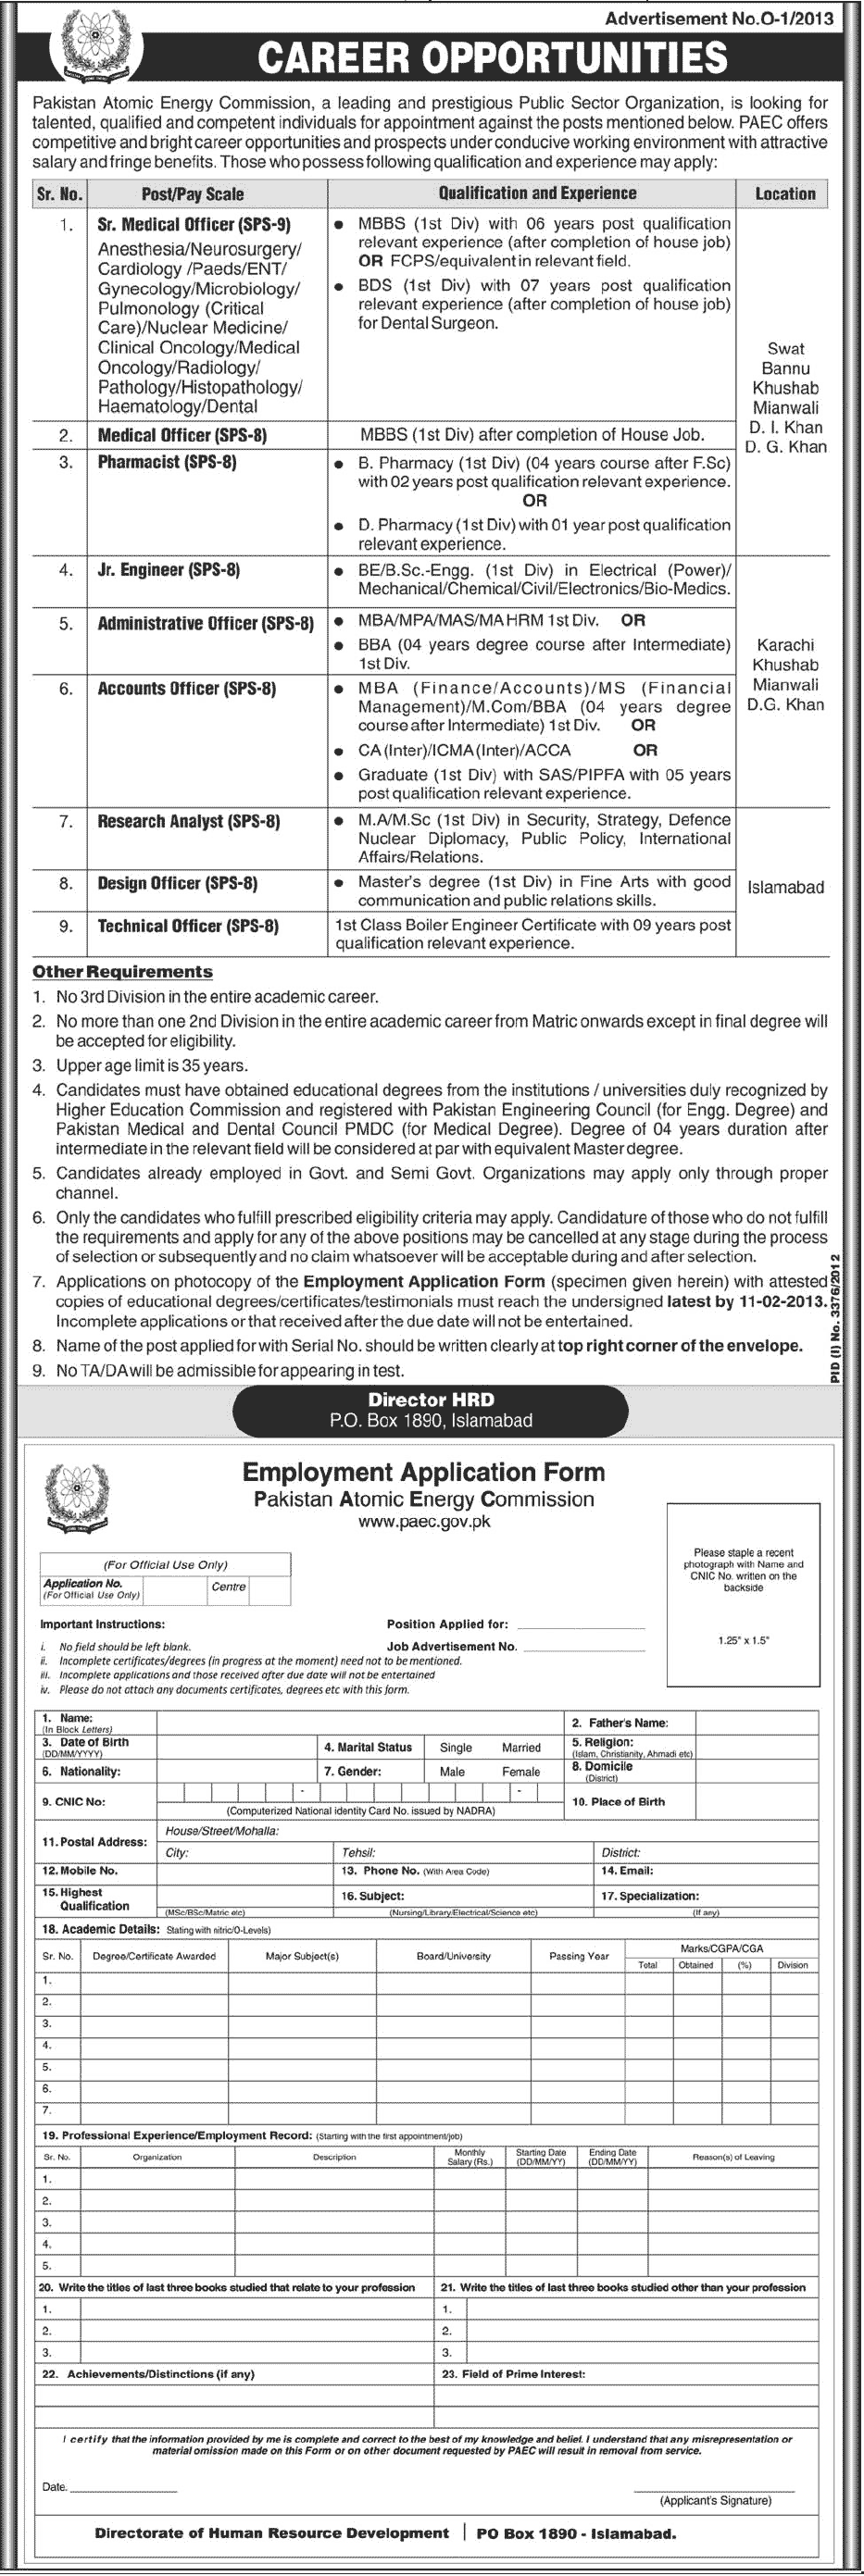 www.PAEC.gov.pk Jobs Application Form 2013